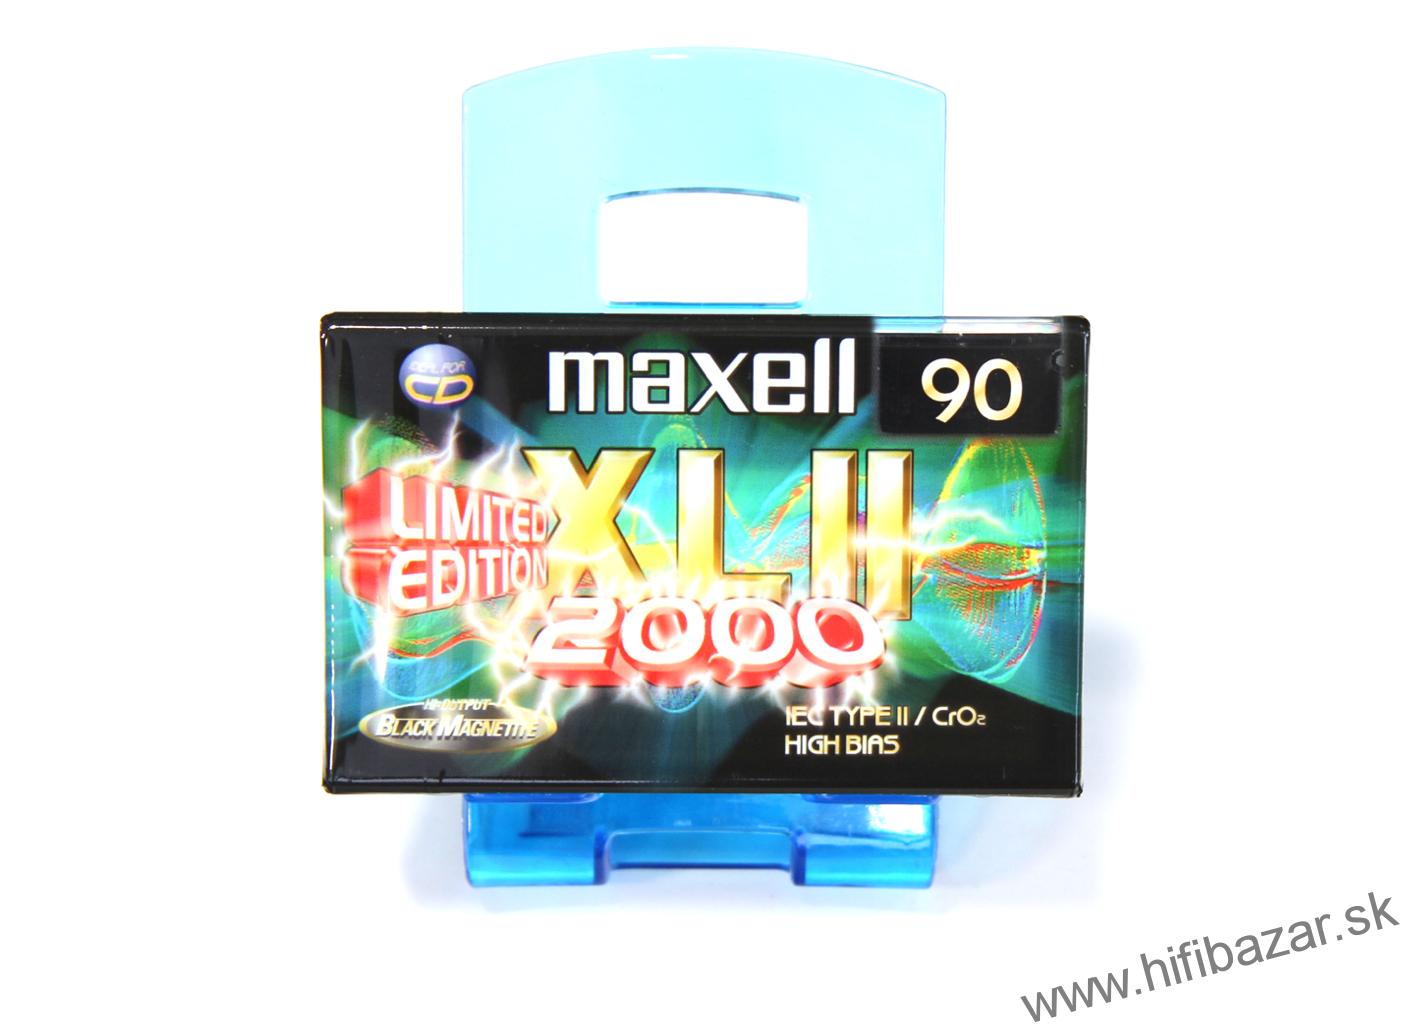 MAXELL XLII-90 Limited Edition